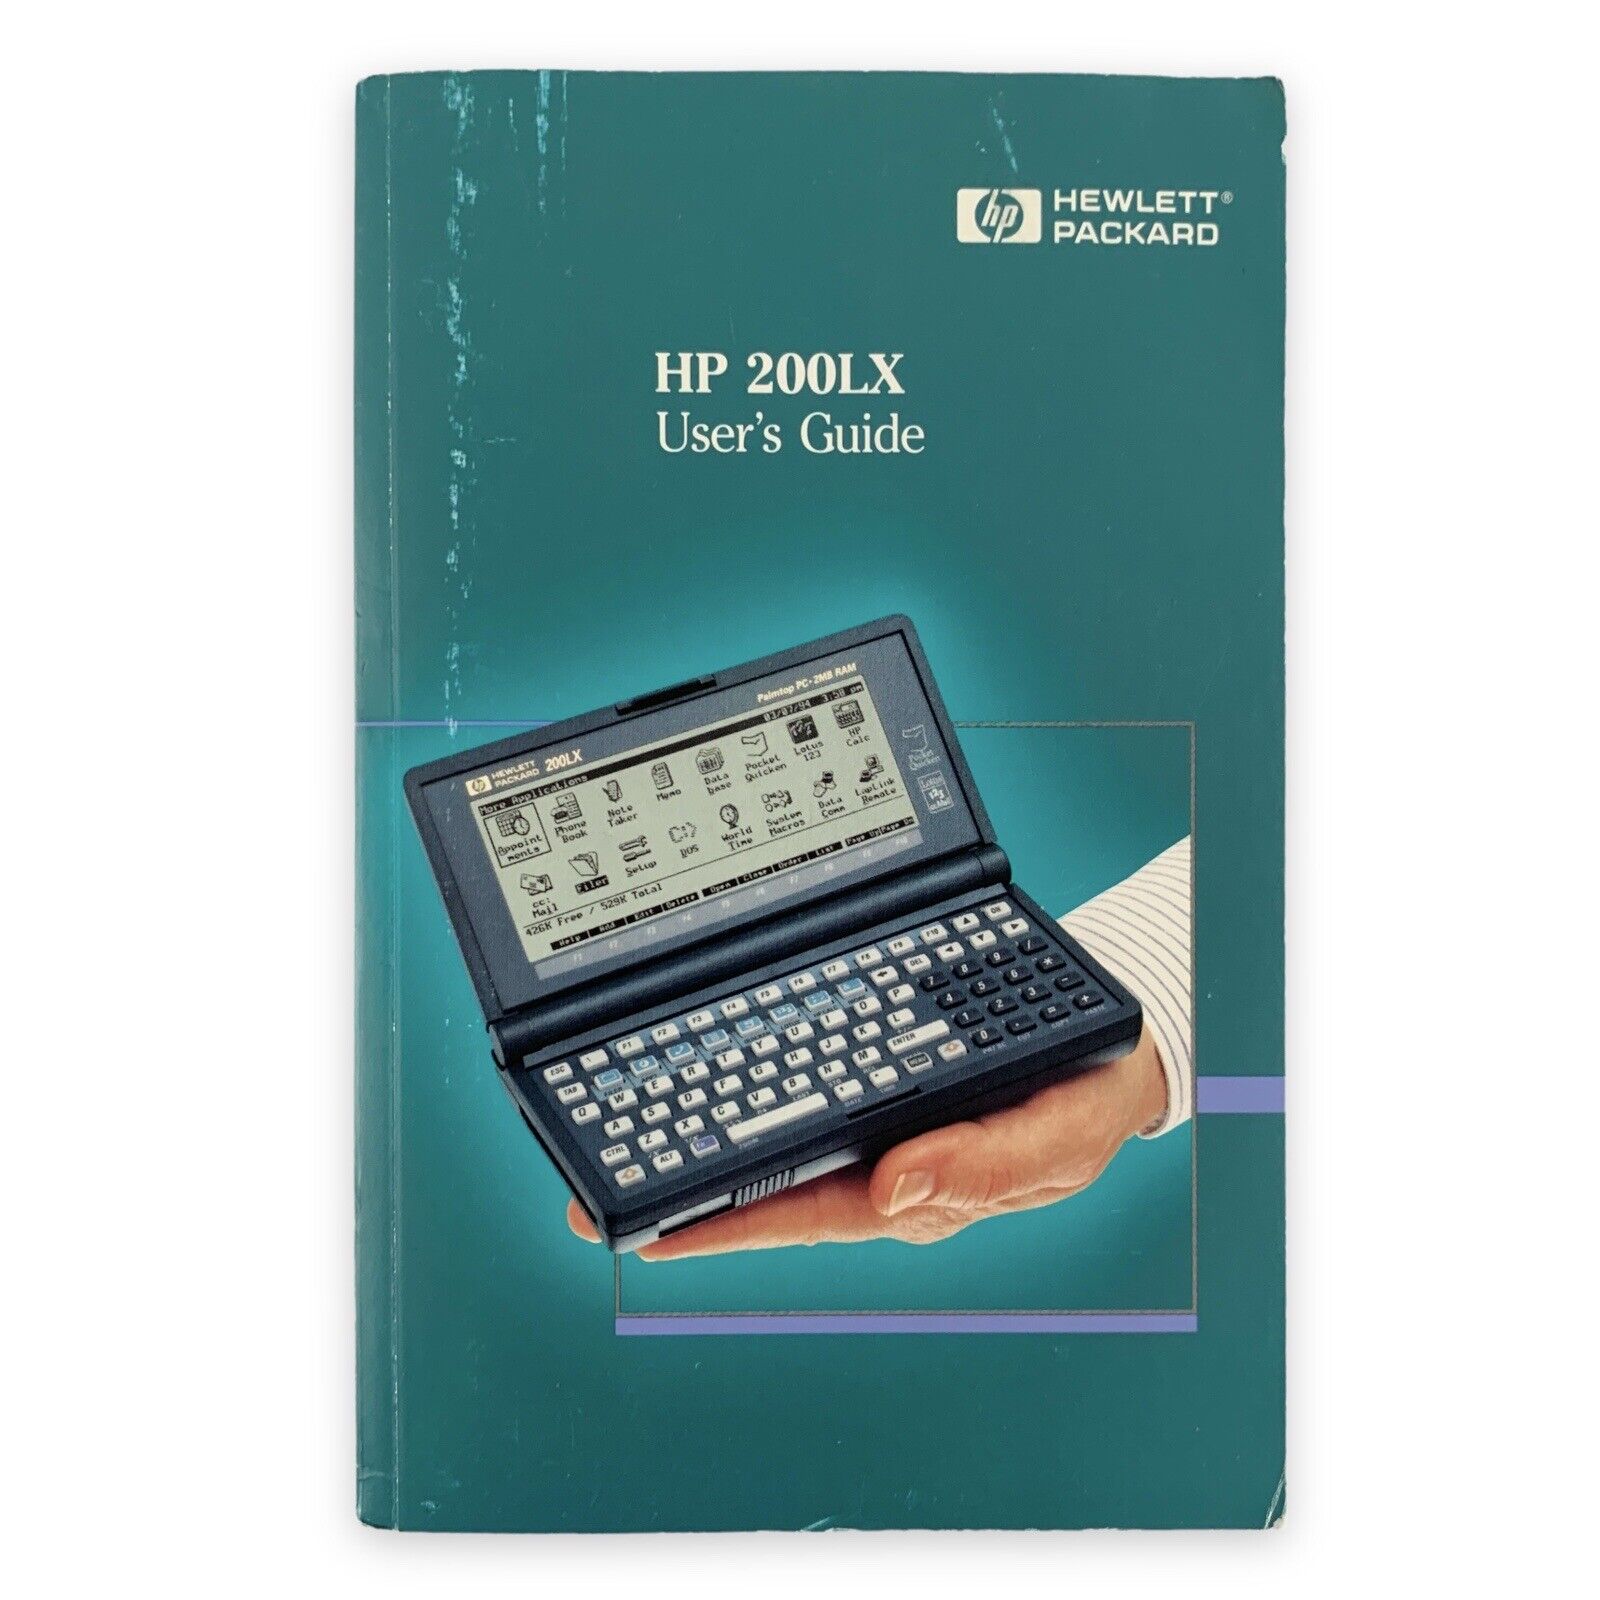 Hewlett Packard HP 200LX User’s Guide Manual Edition 2 VTG 1994 